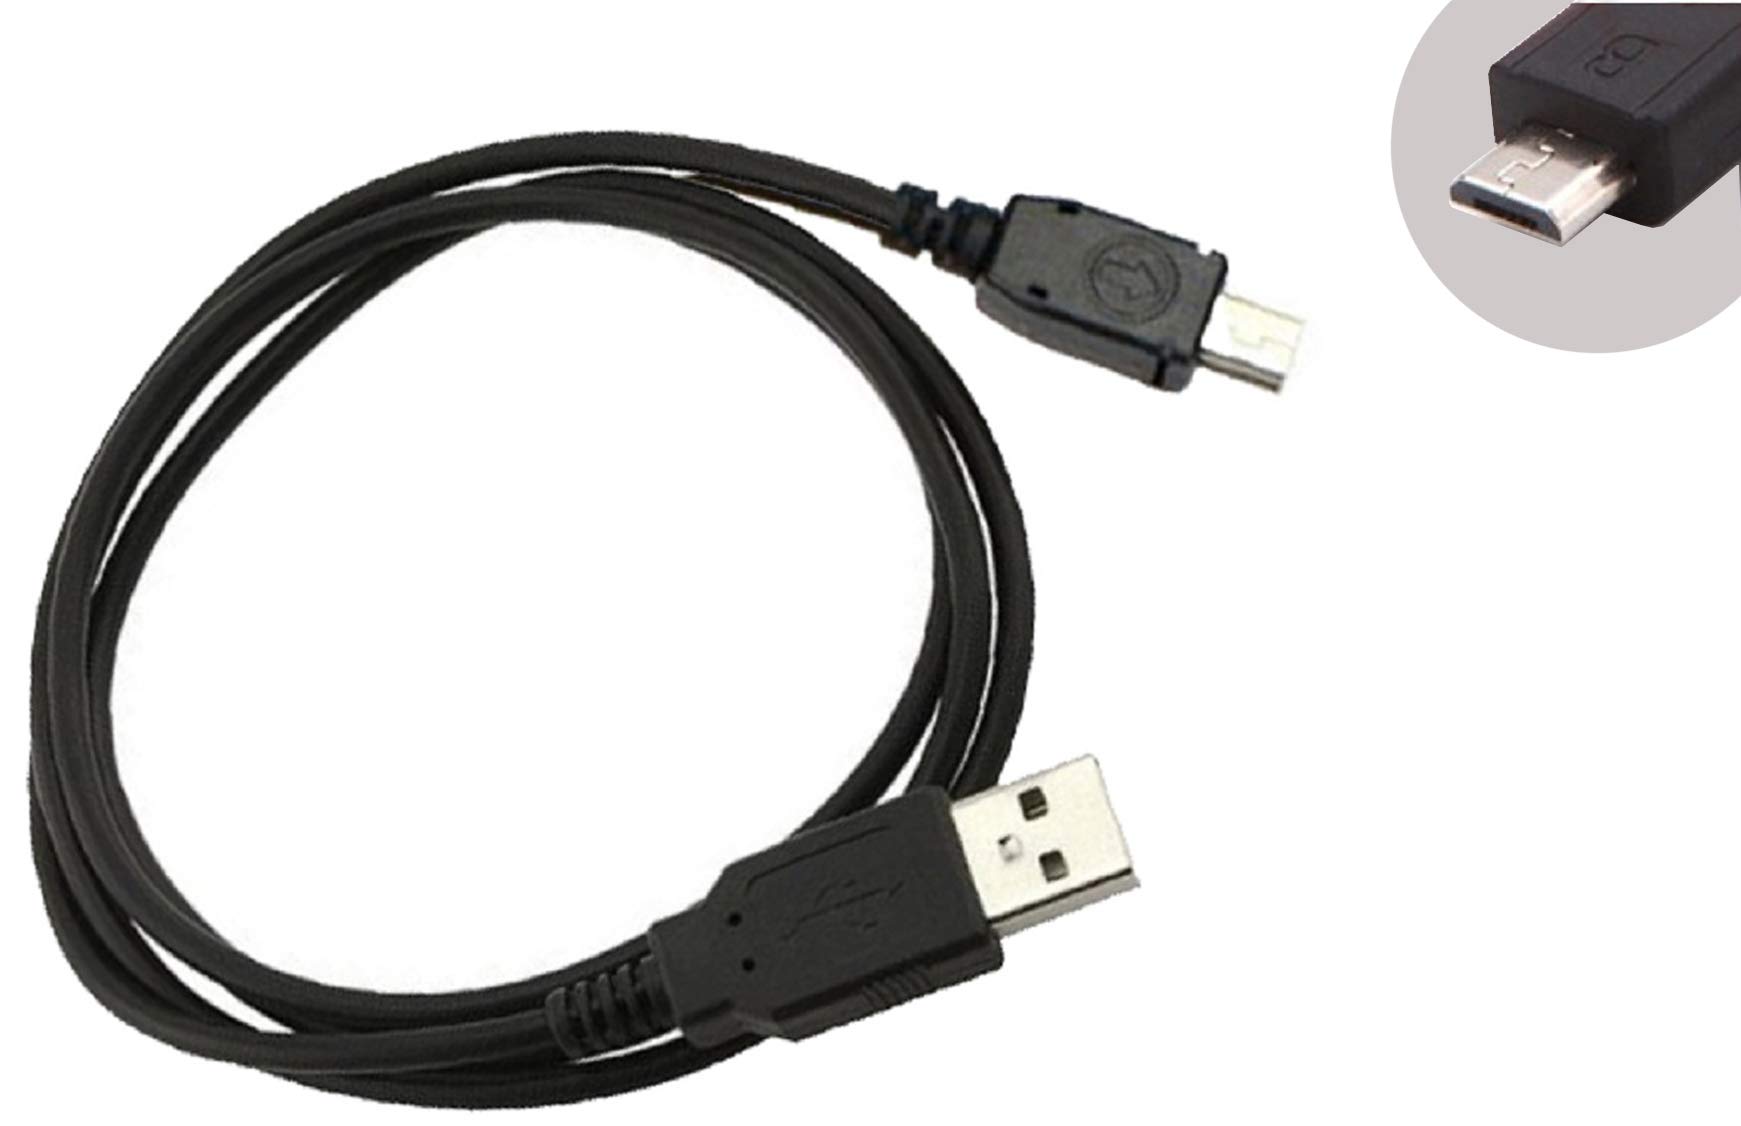 UpBright USB Power Cord Cable Compatible with Sony SRSX3 SRS-BTV5 SRSBTV5 SRSX3WHT SRS-X3 SRS-XB2G SRSXB2G SRS-X2 SRSX2 2-Channel Ultra Bluetooth Speaker SRS-X11 SRSX11 SRS-XB2 SRSXB2 Extra Bass Audio